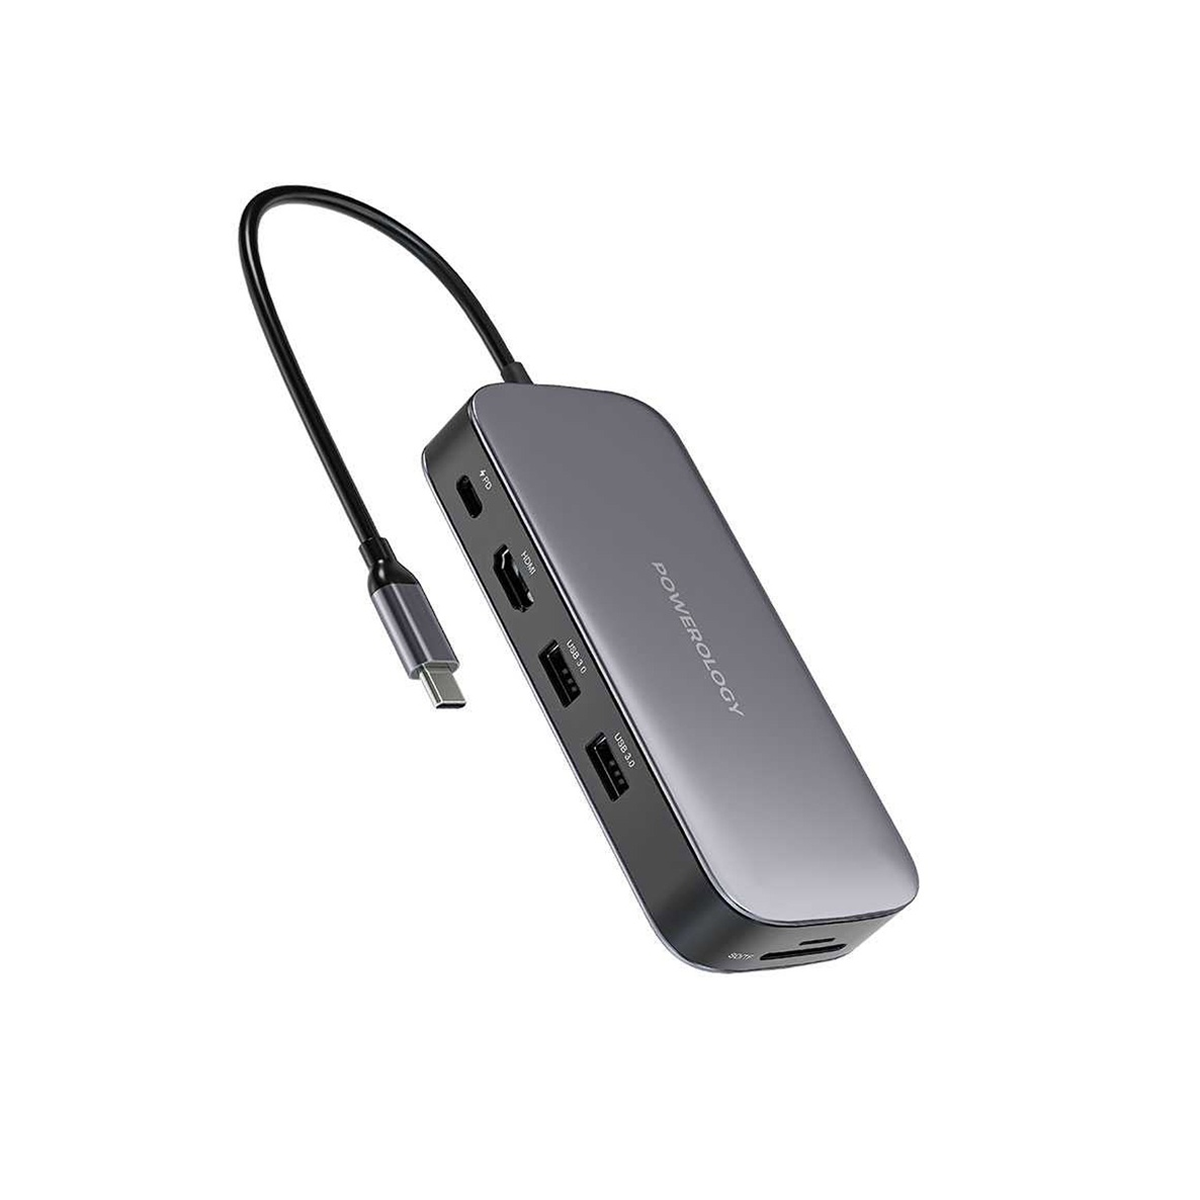  هاب USB-C پاورولوجی 6 پورت مدل SSD Drive-small-image